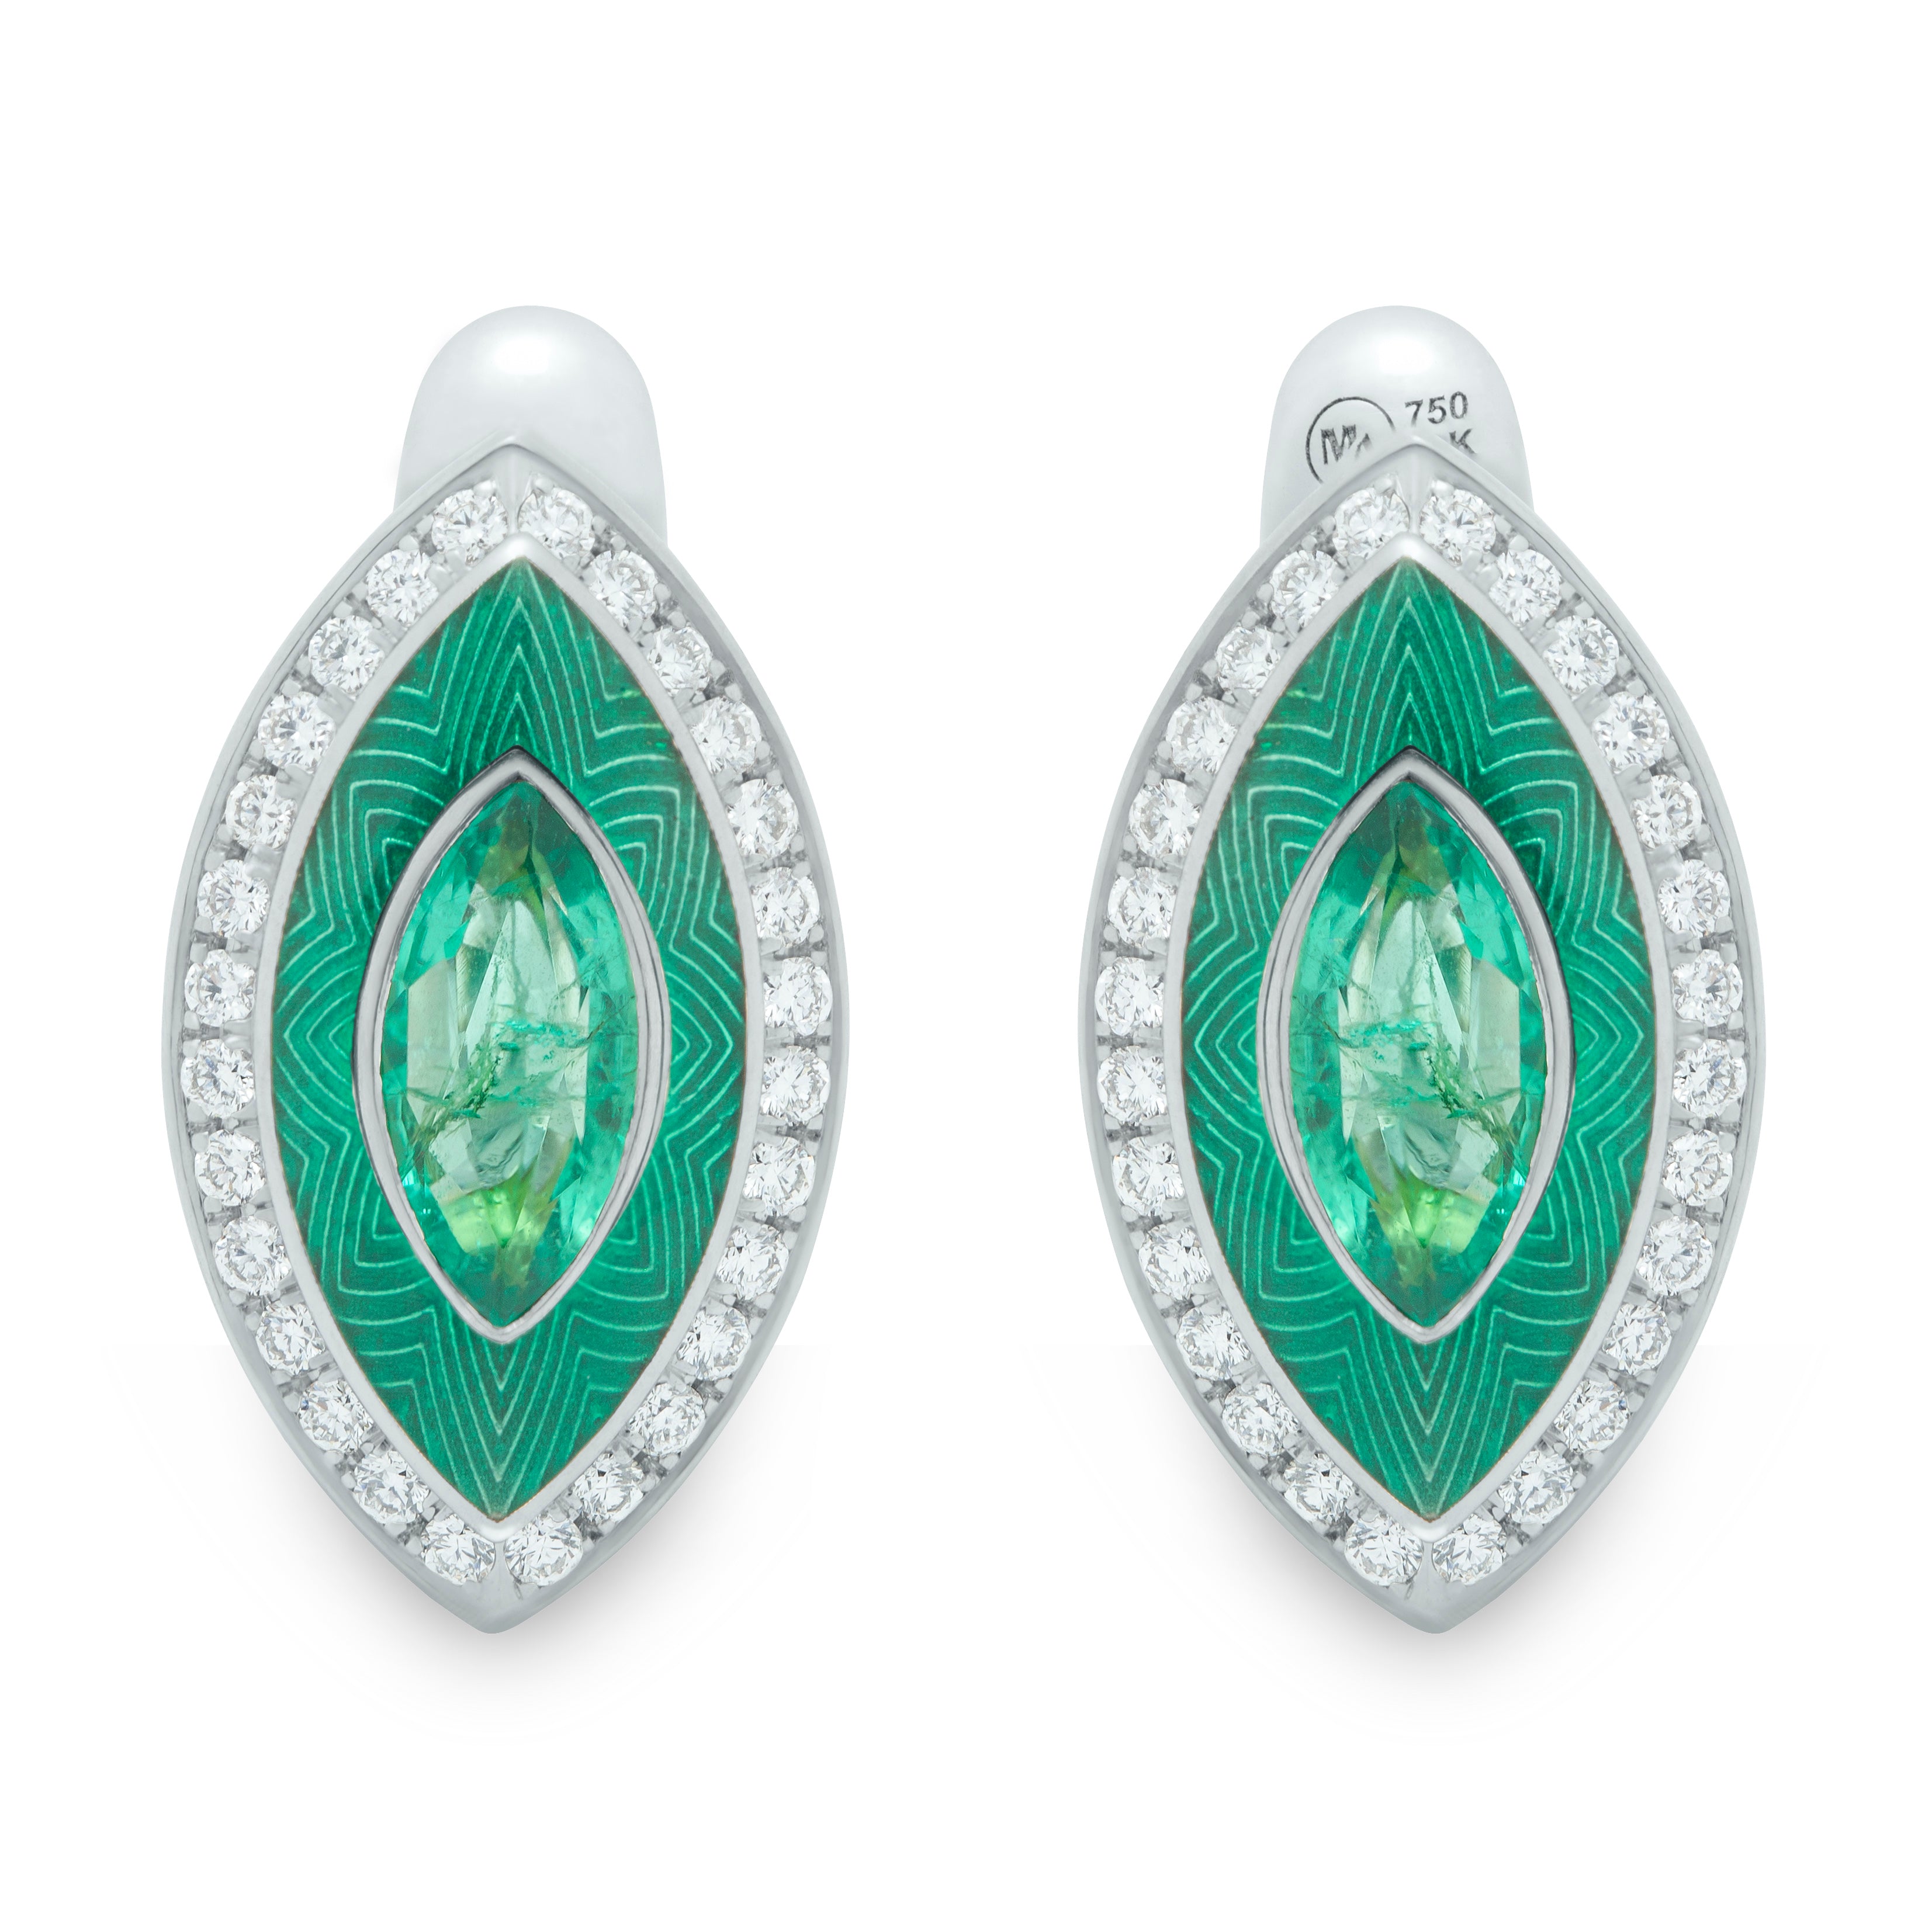 E 0084-11 18K White Gold, Enamel, Emerald, Diamonds Earrings